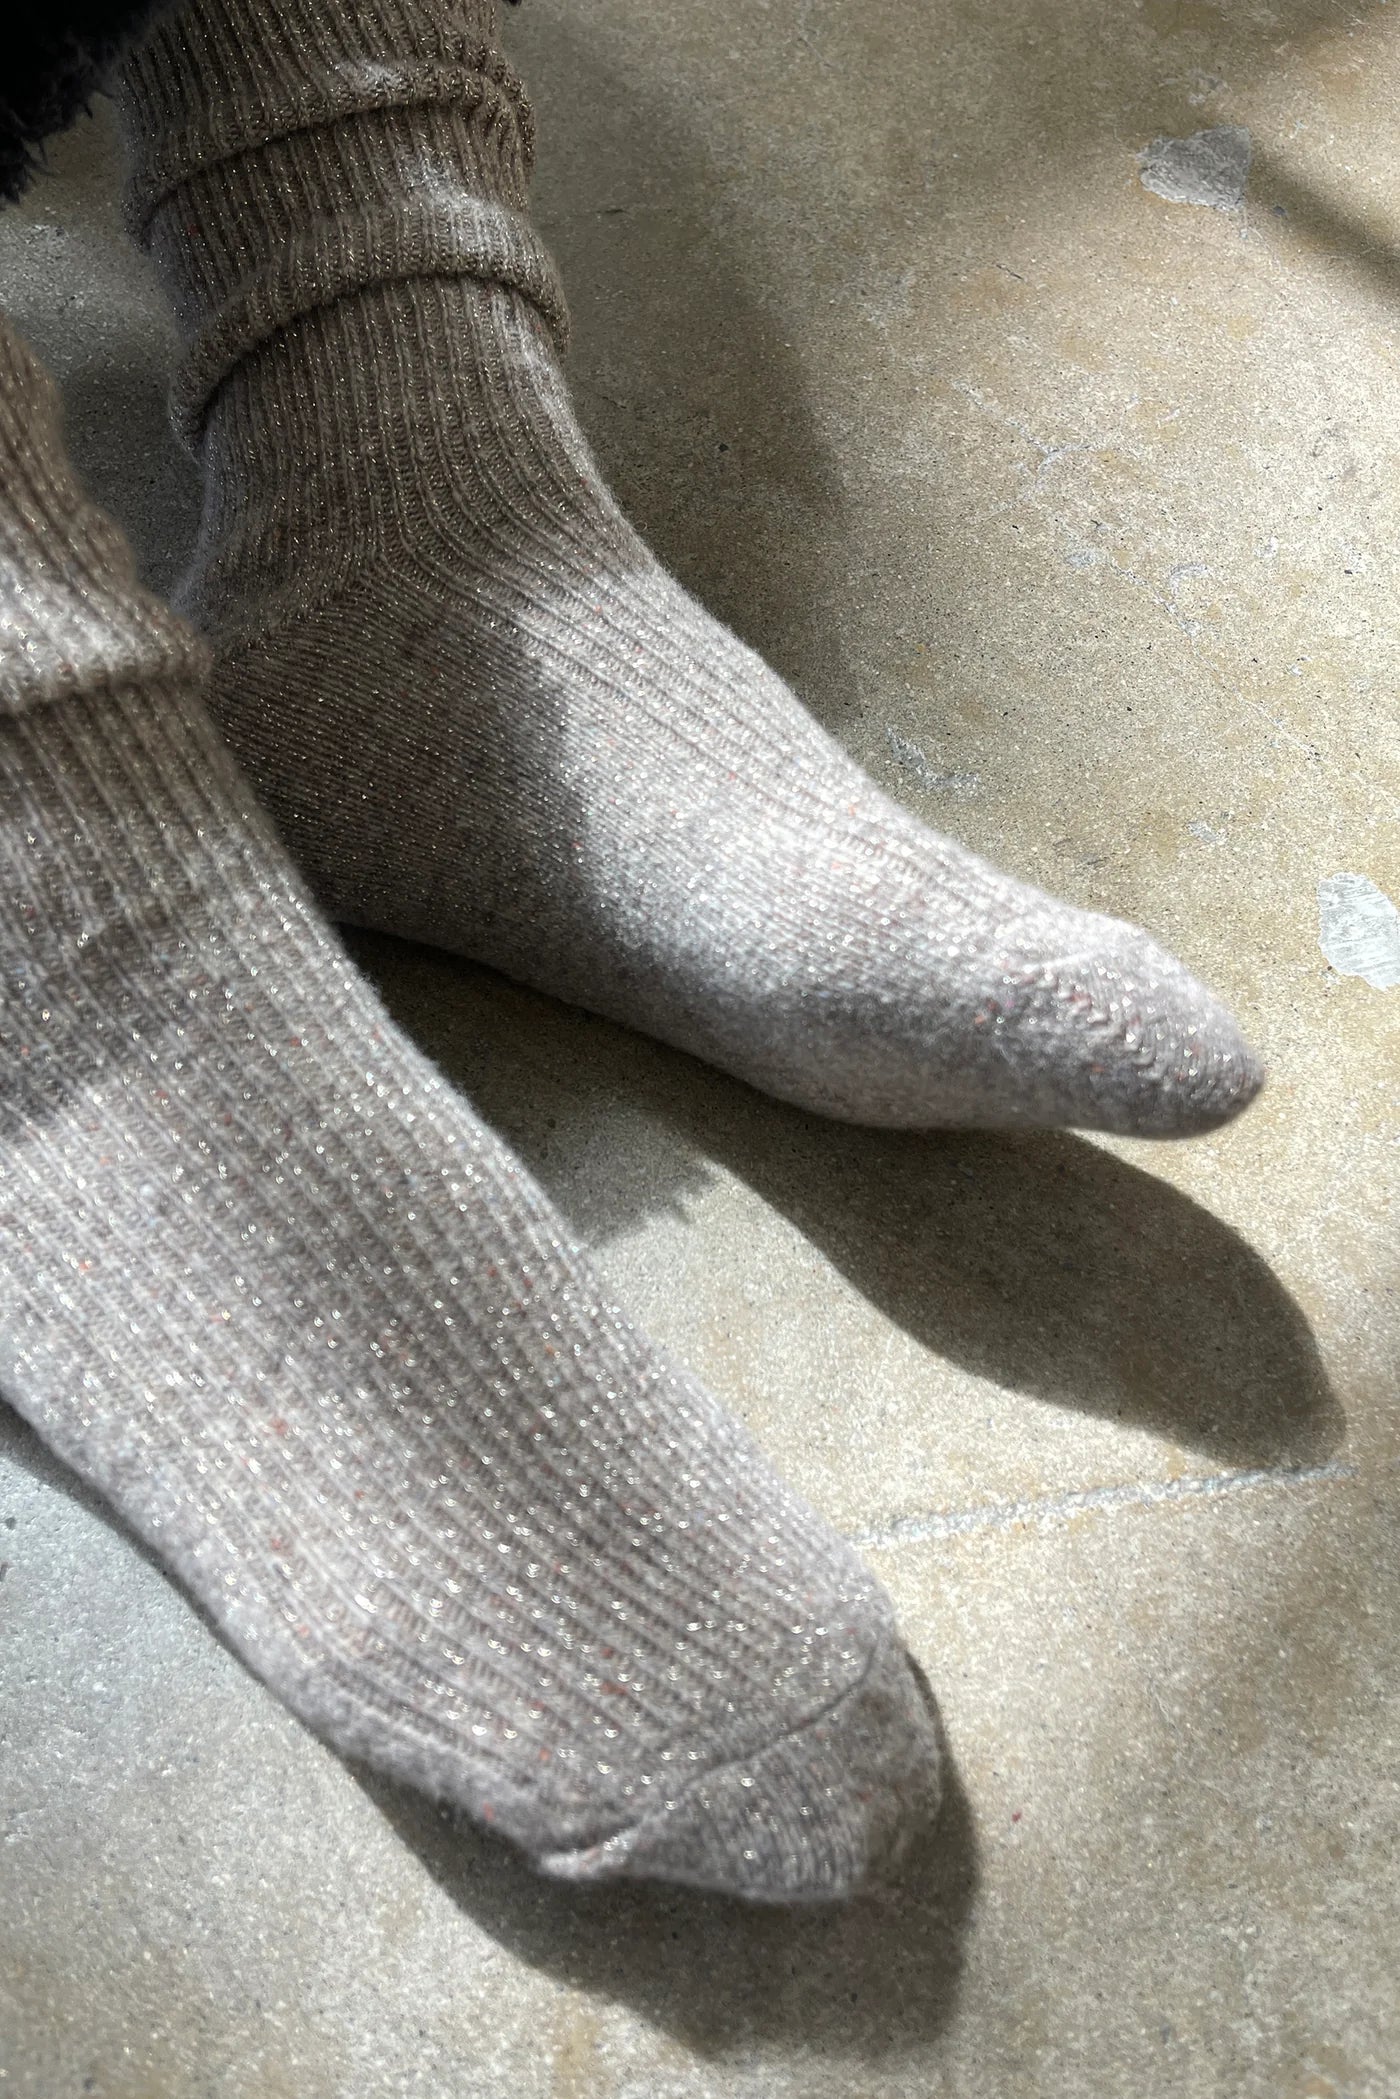 Le Bon Shoppe | Winter Sparkly Socks - Nutmeg